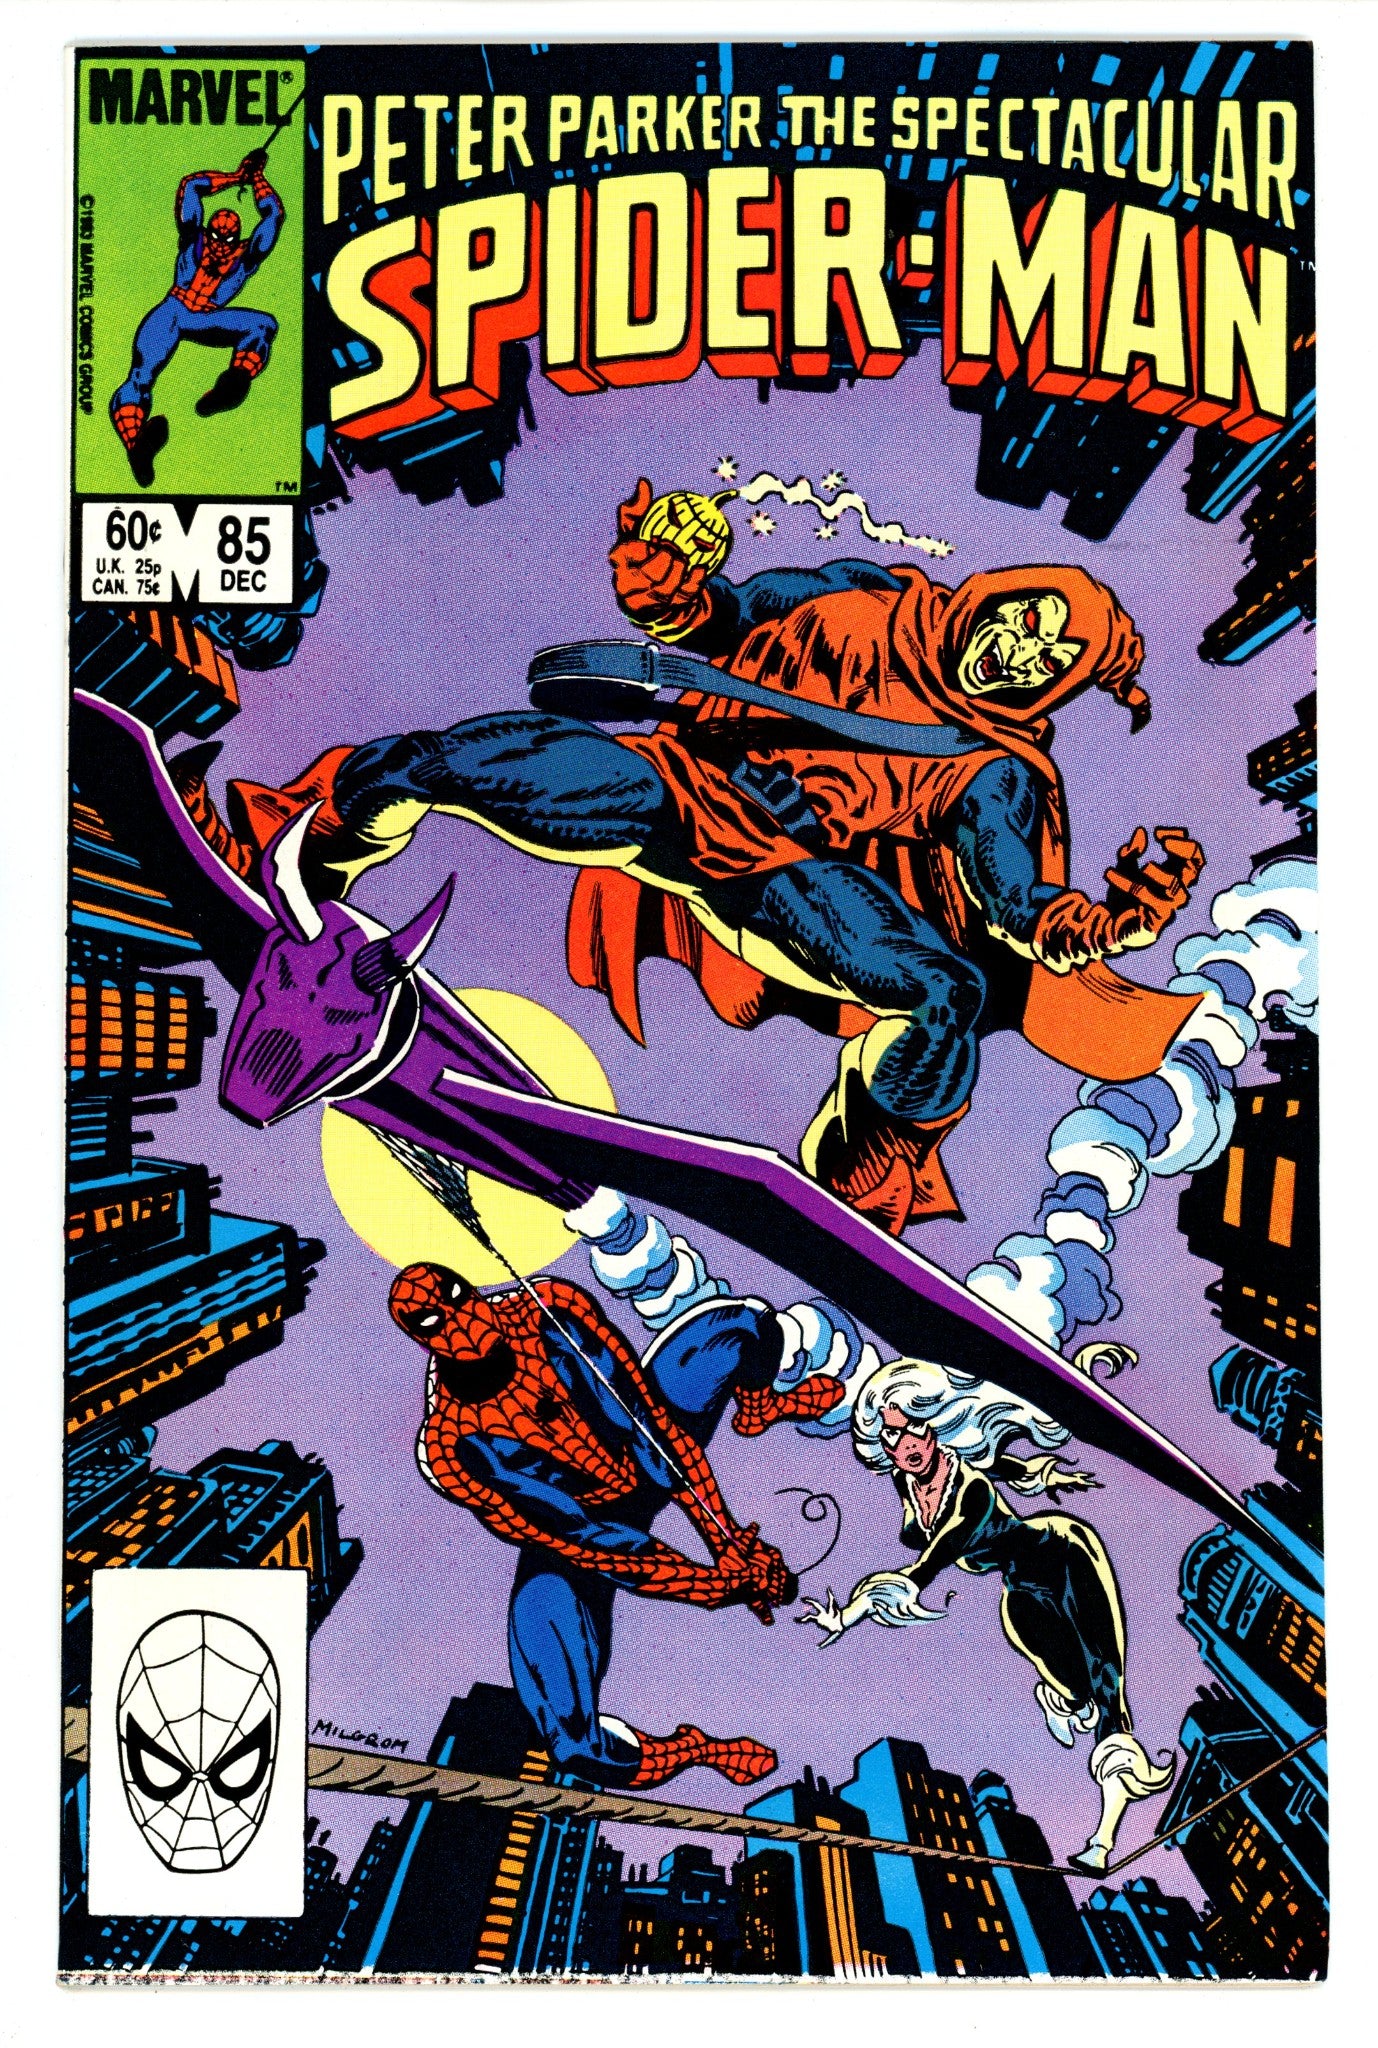 The Spectacular Spider-Man Vol 1 85 NM- (9.2) (1983) 